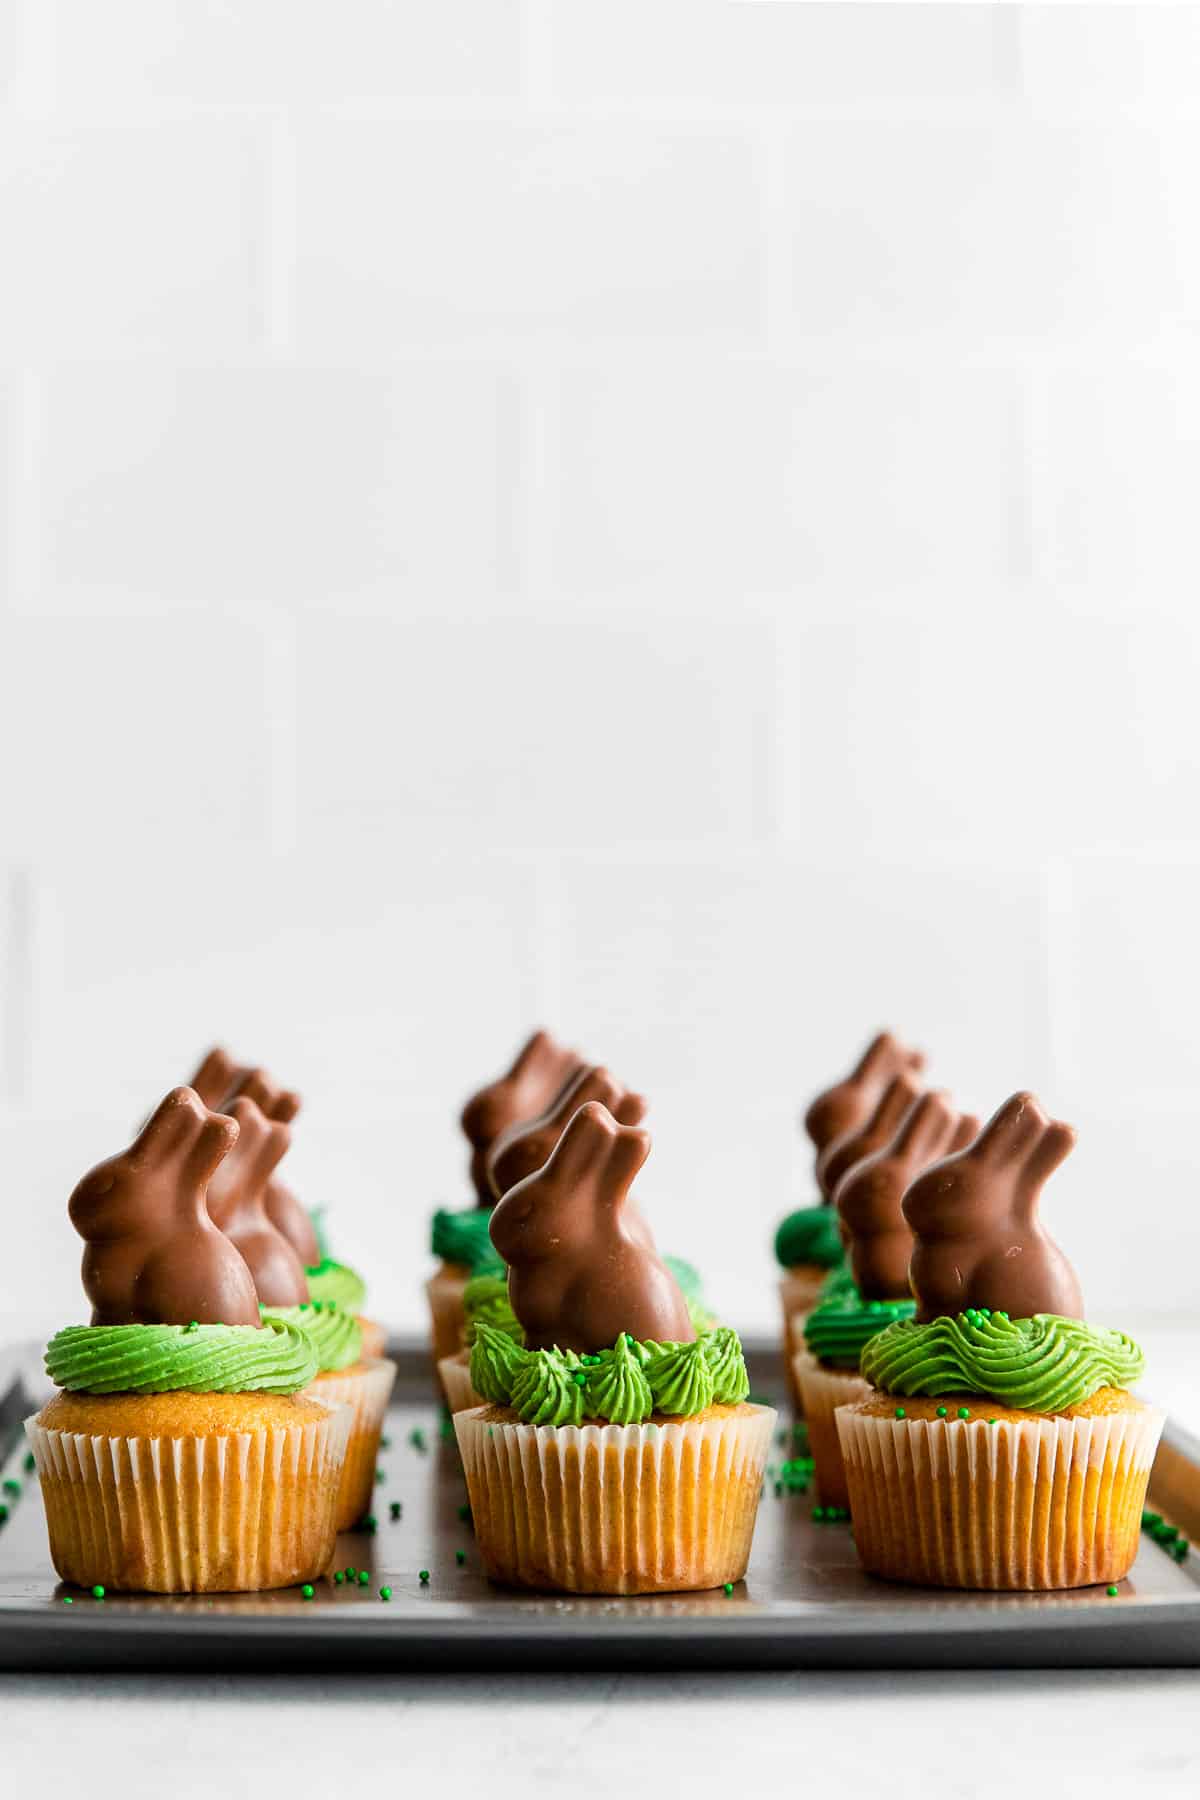 carrot cake cupcakes with chocolate bunnies